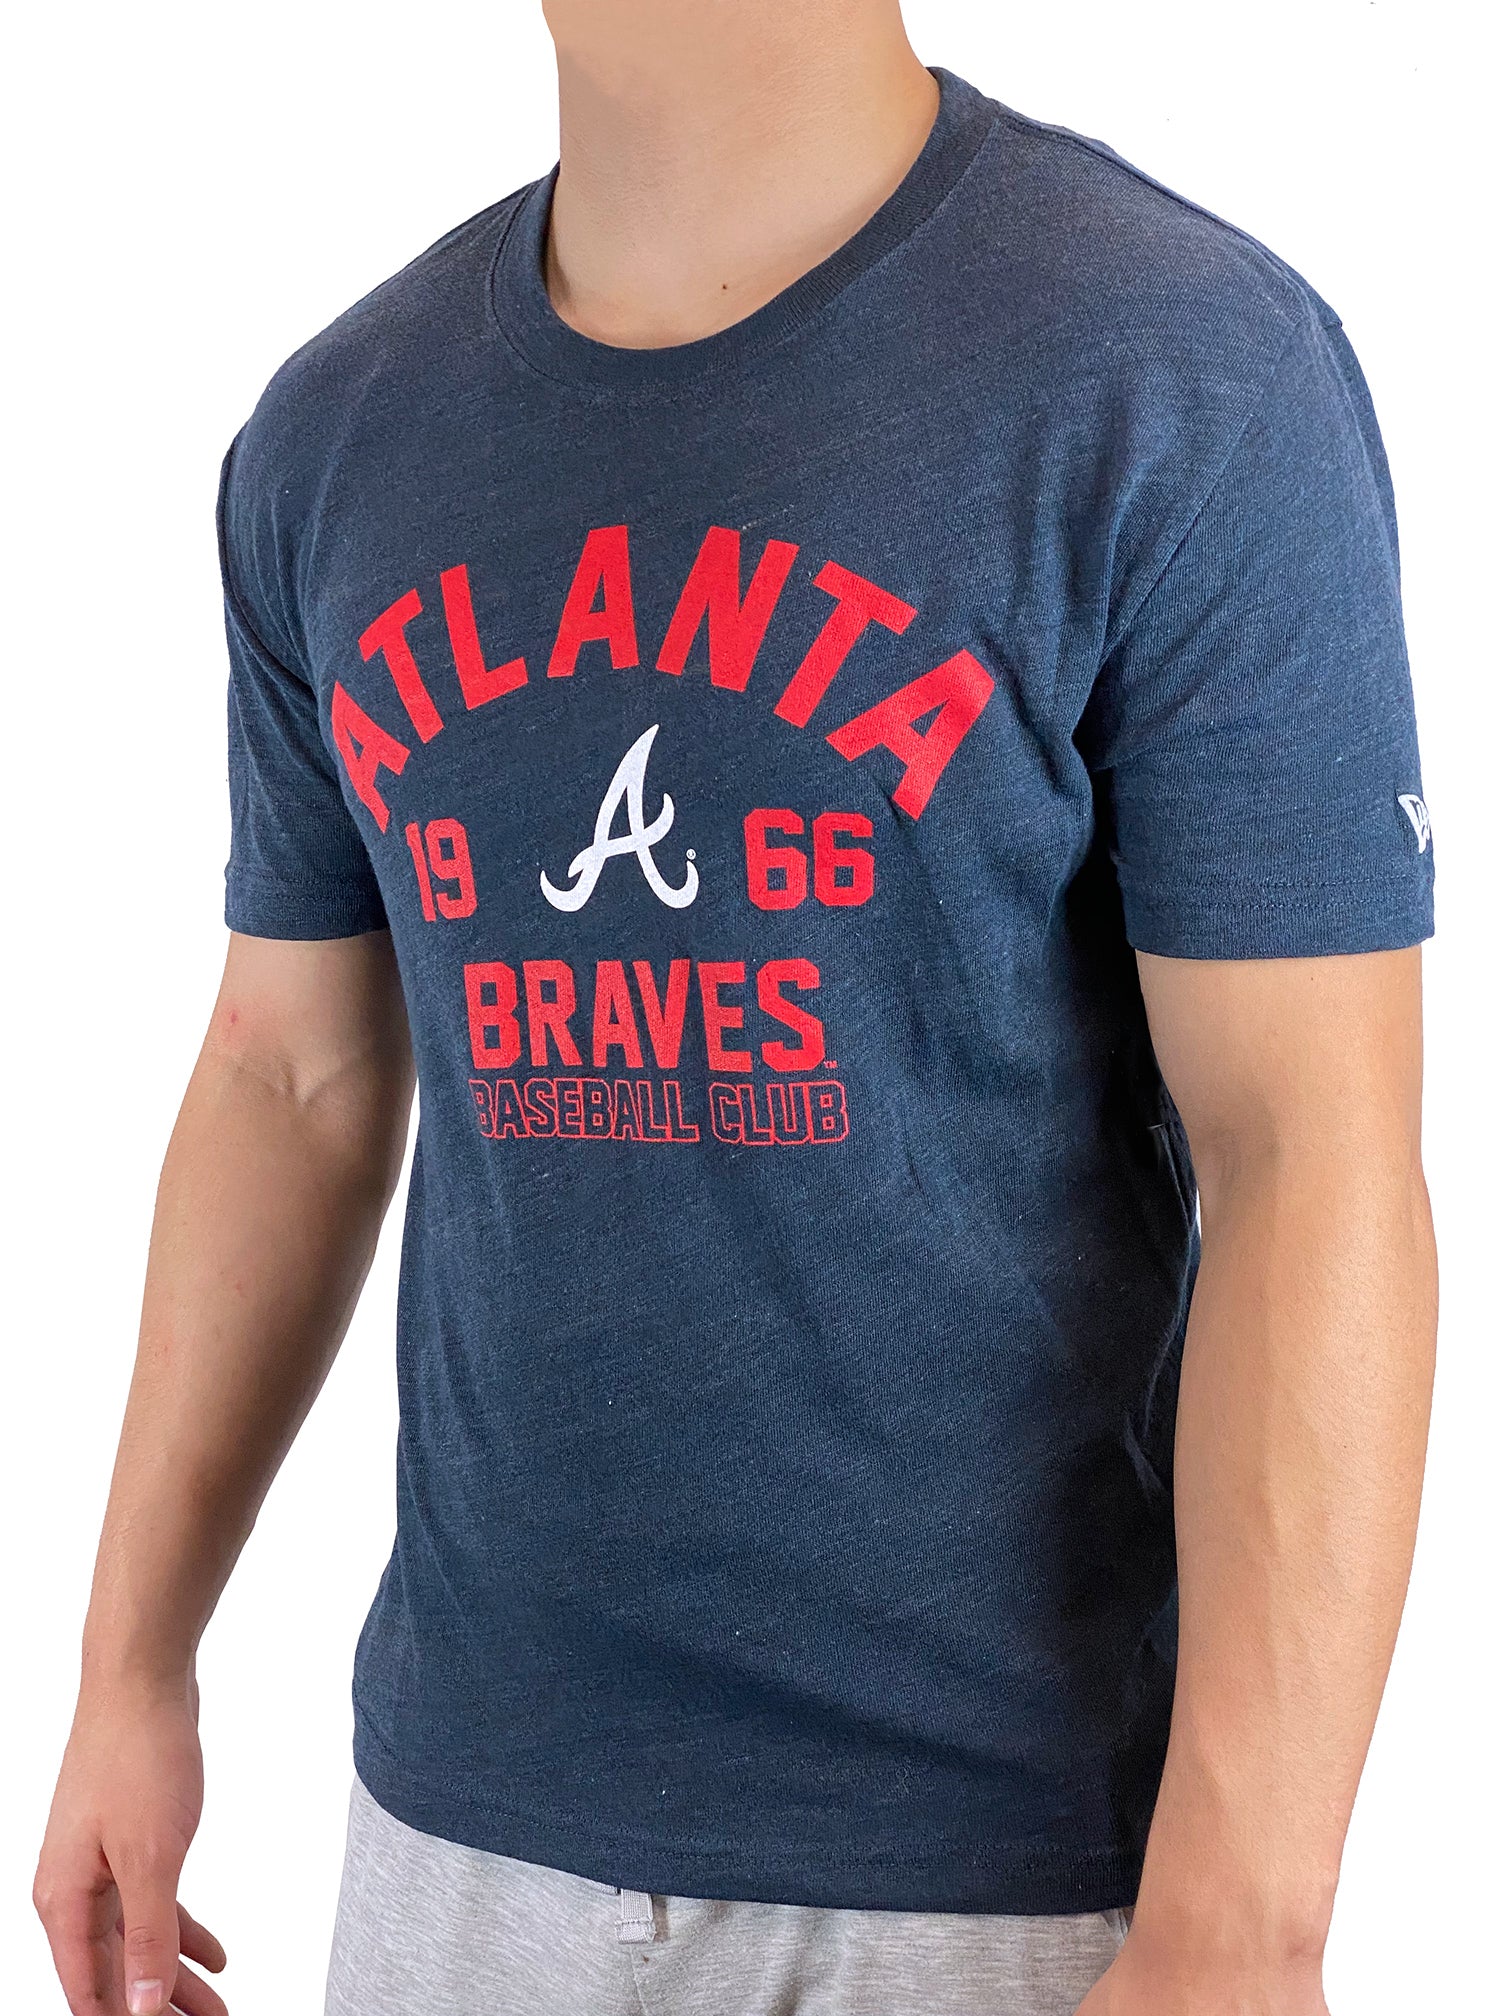 where to buy atlanta braves shirts